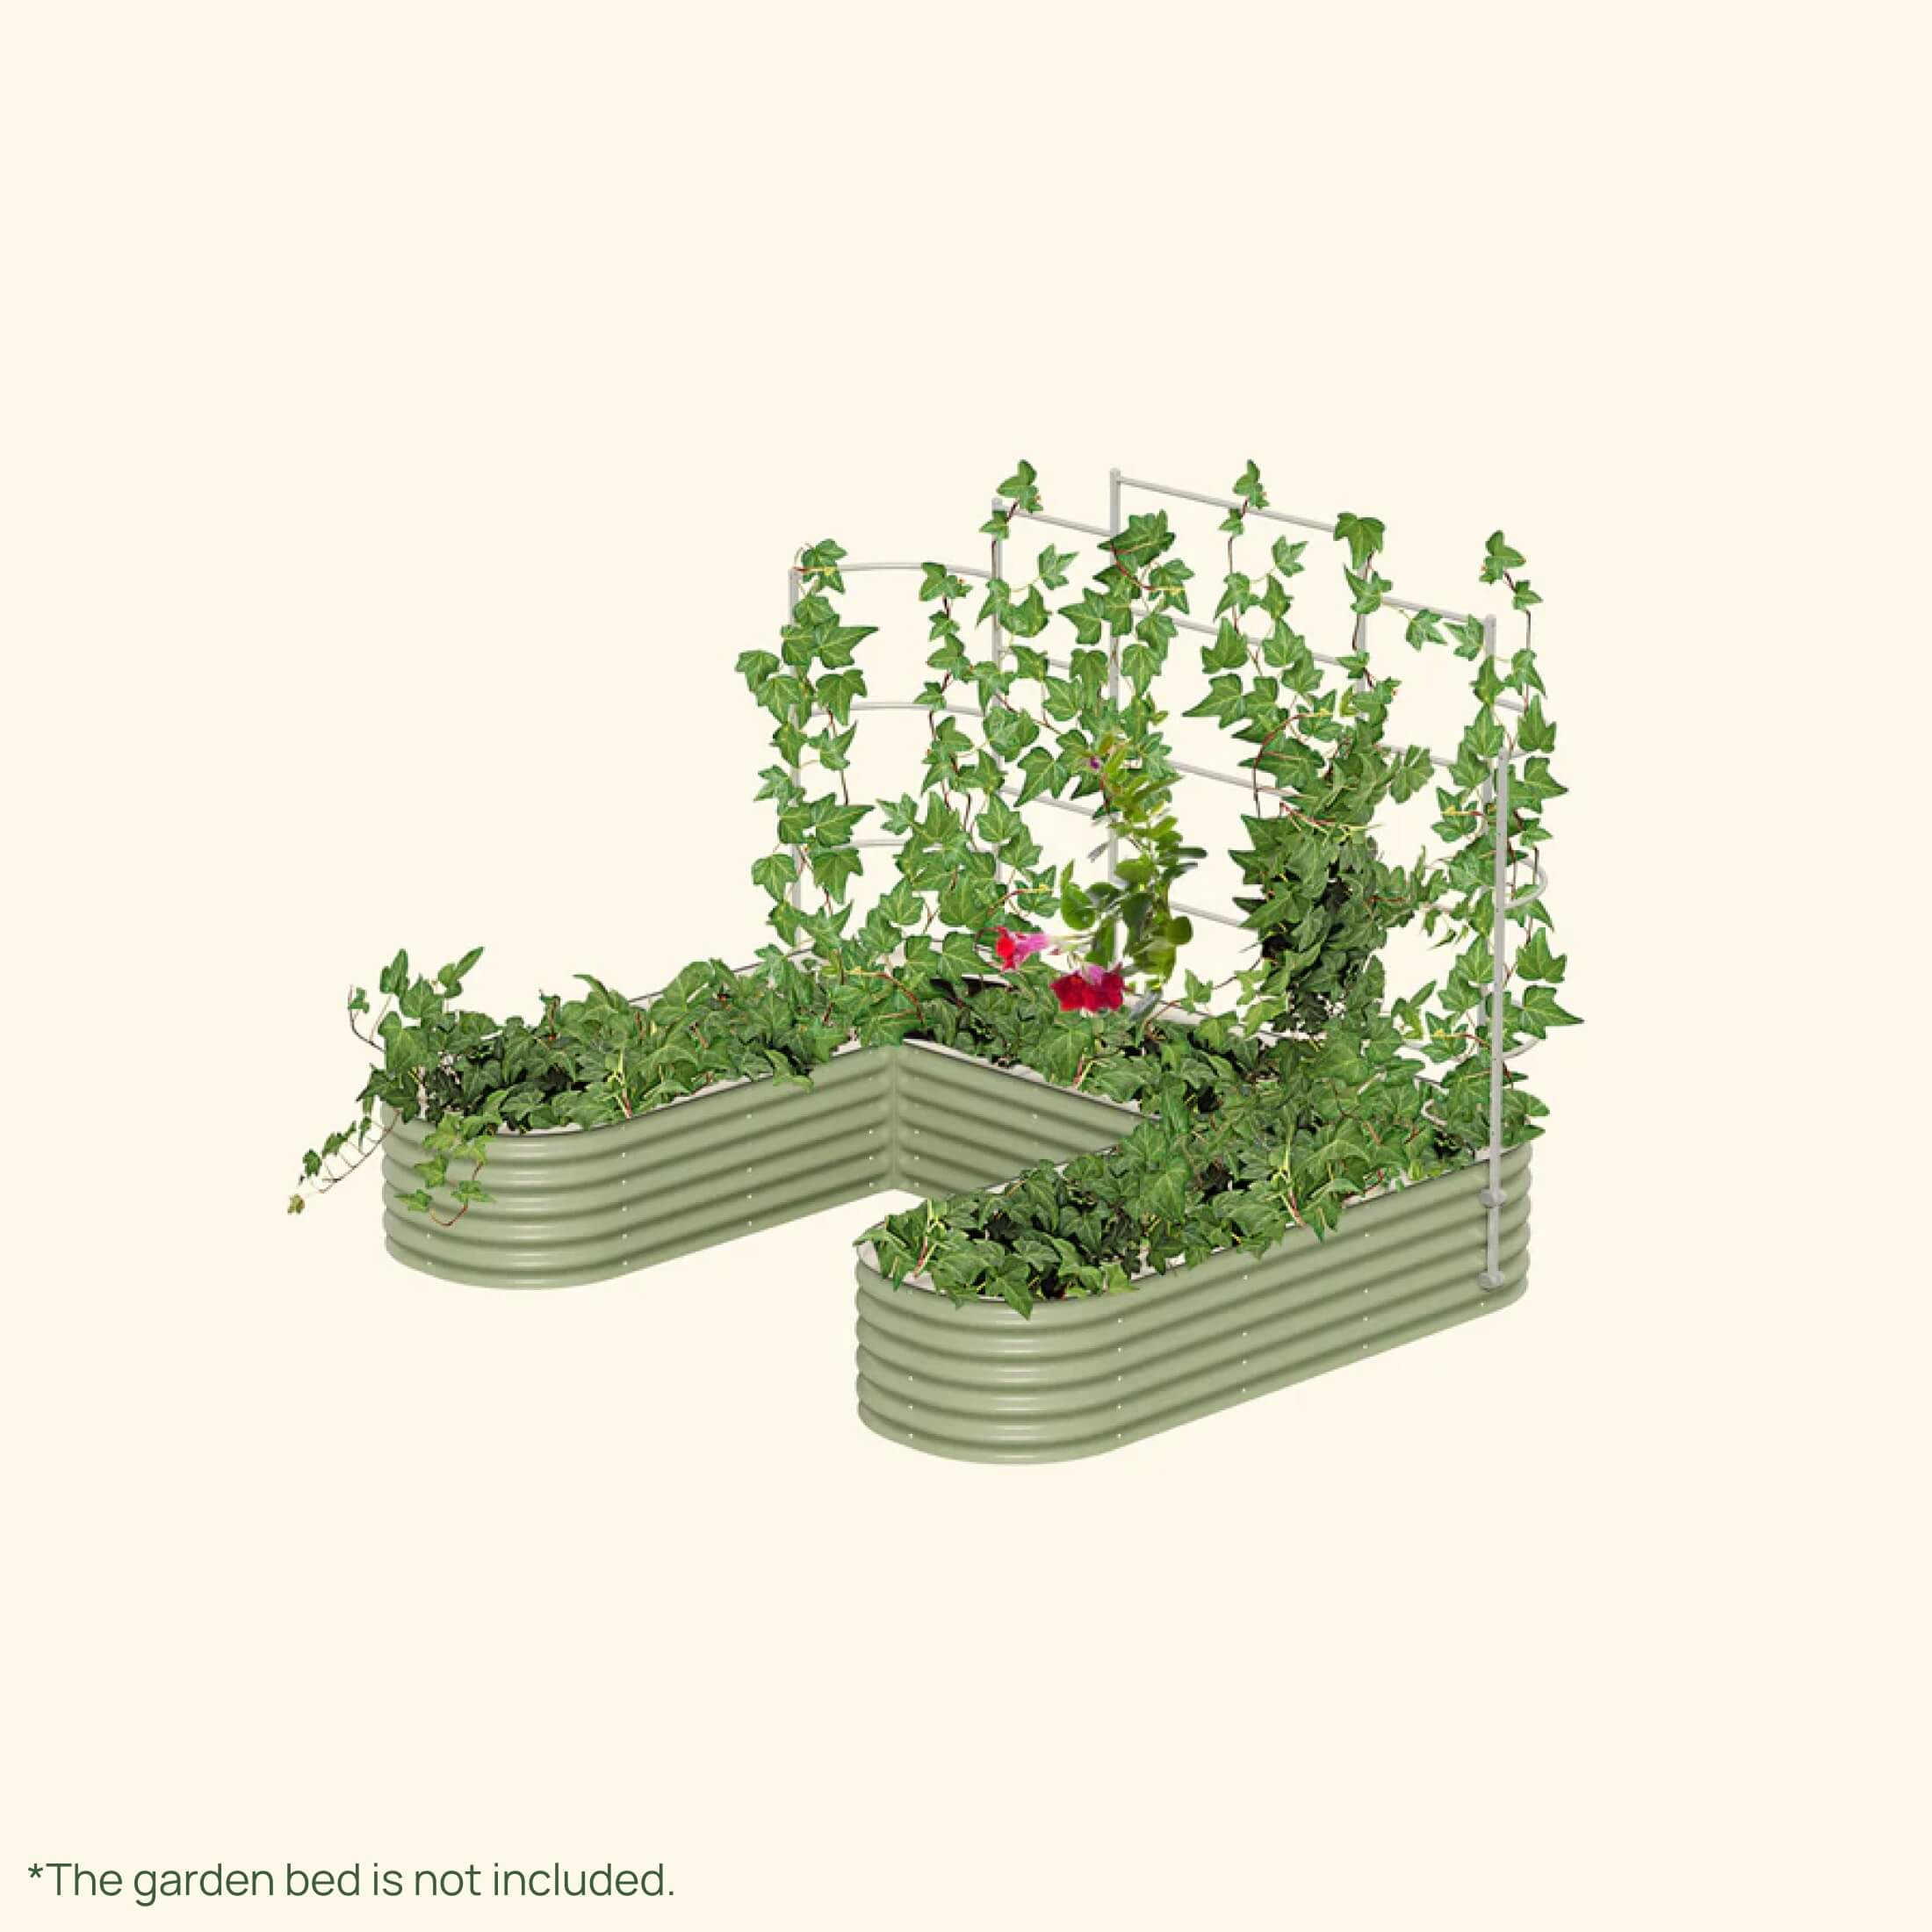 Vego Garden Modular Wall Trellis System - U-Shaped Large Size Garden Beds